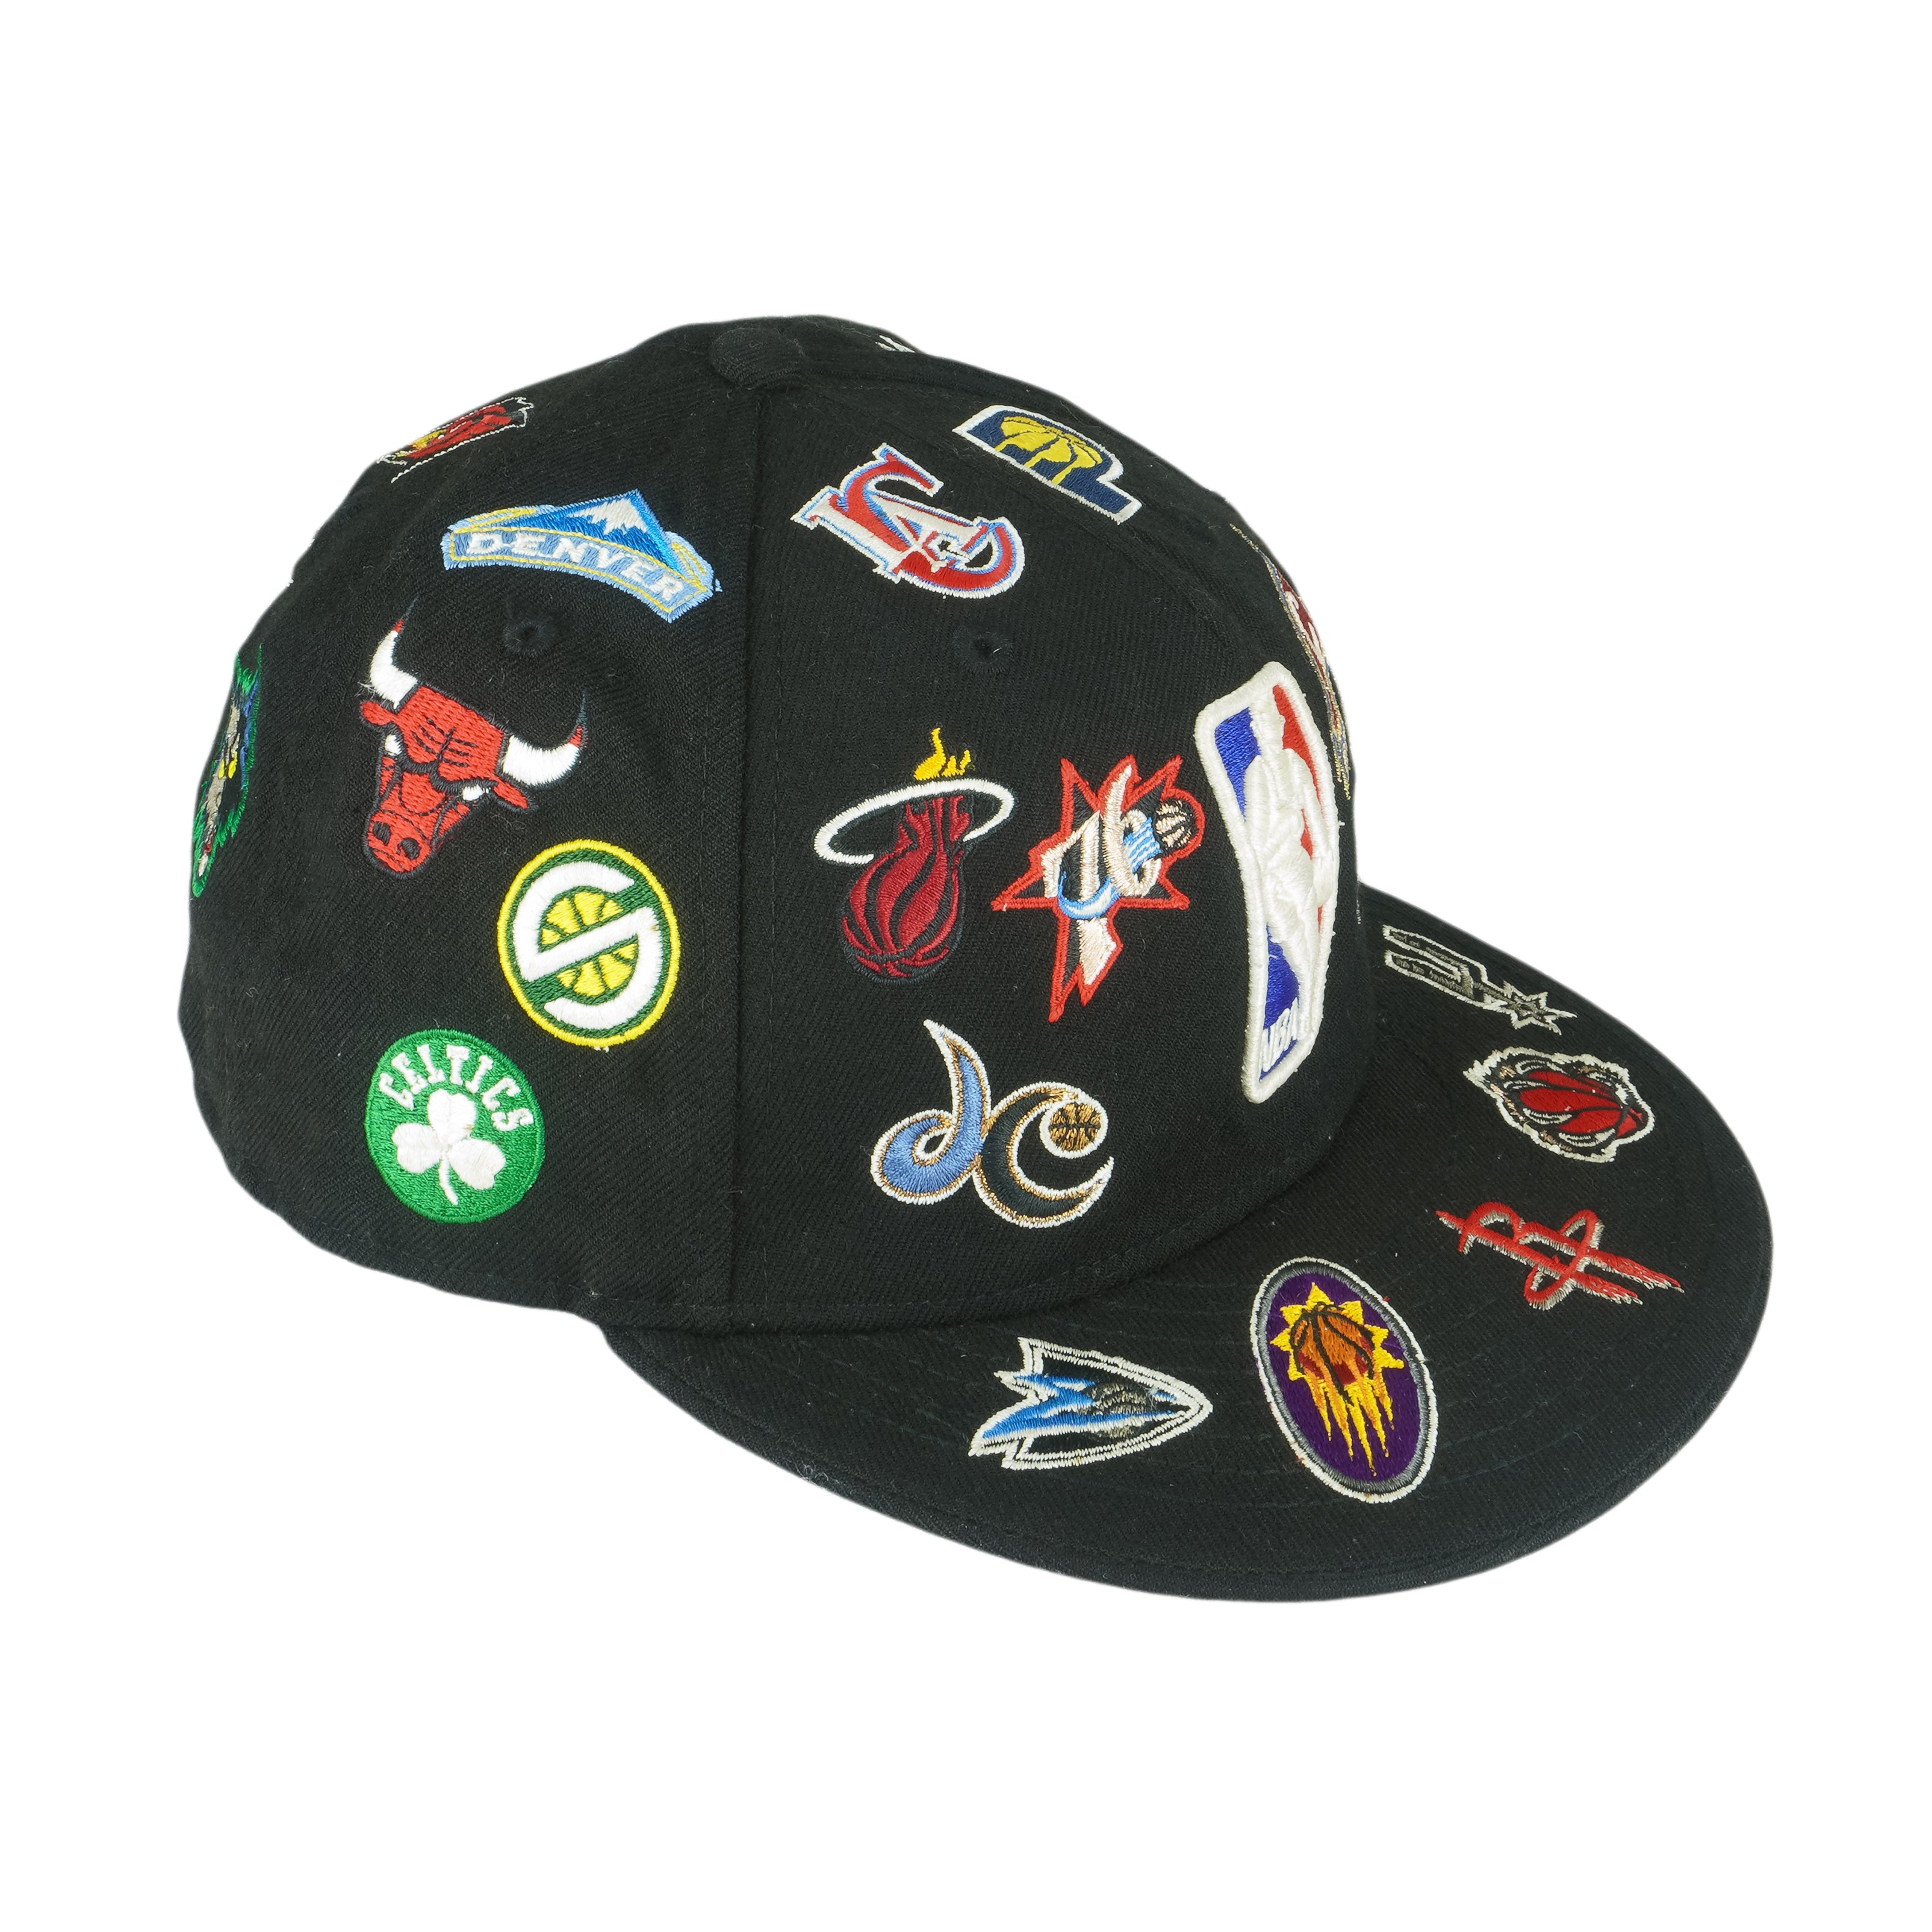 Retro New York Knicks New Era Hat Size 7 1/2